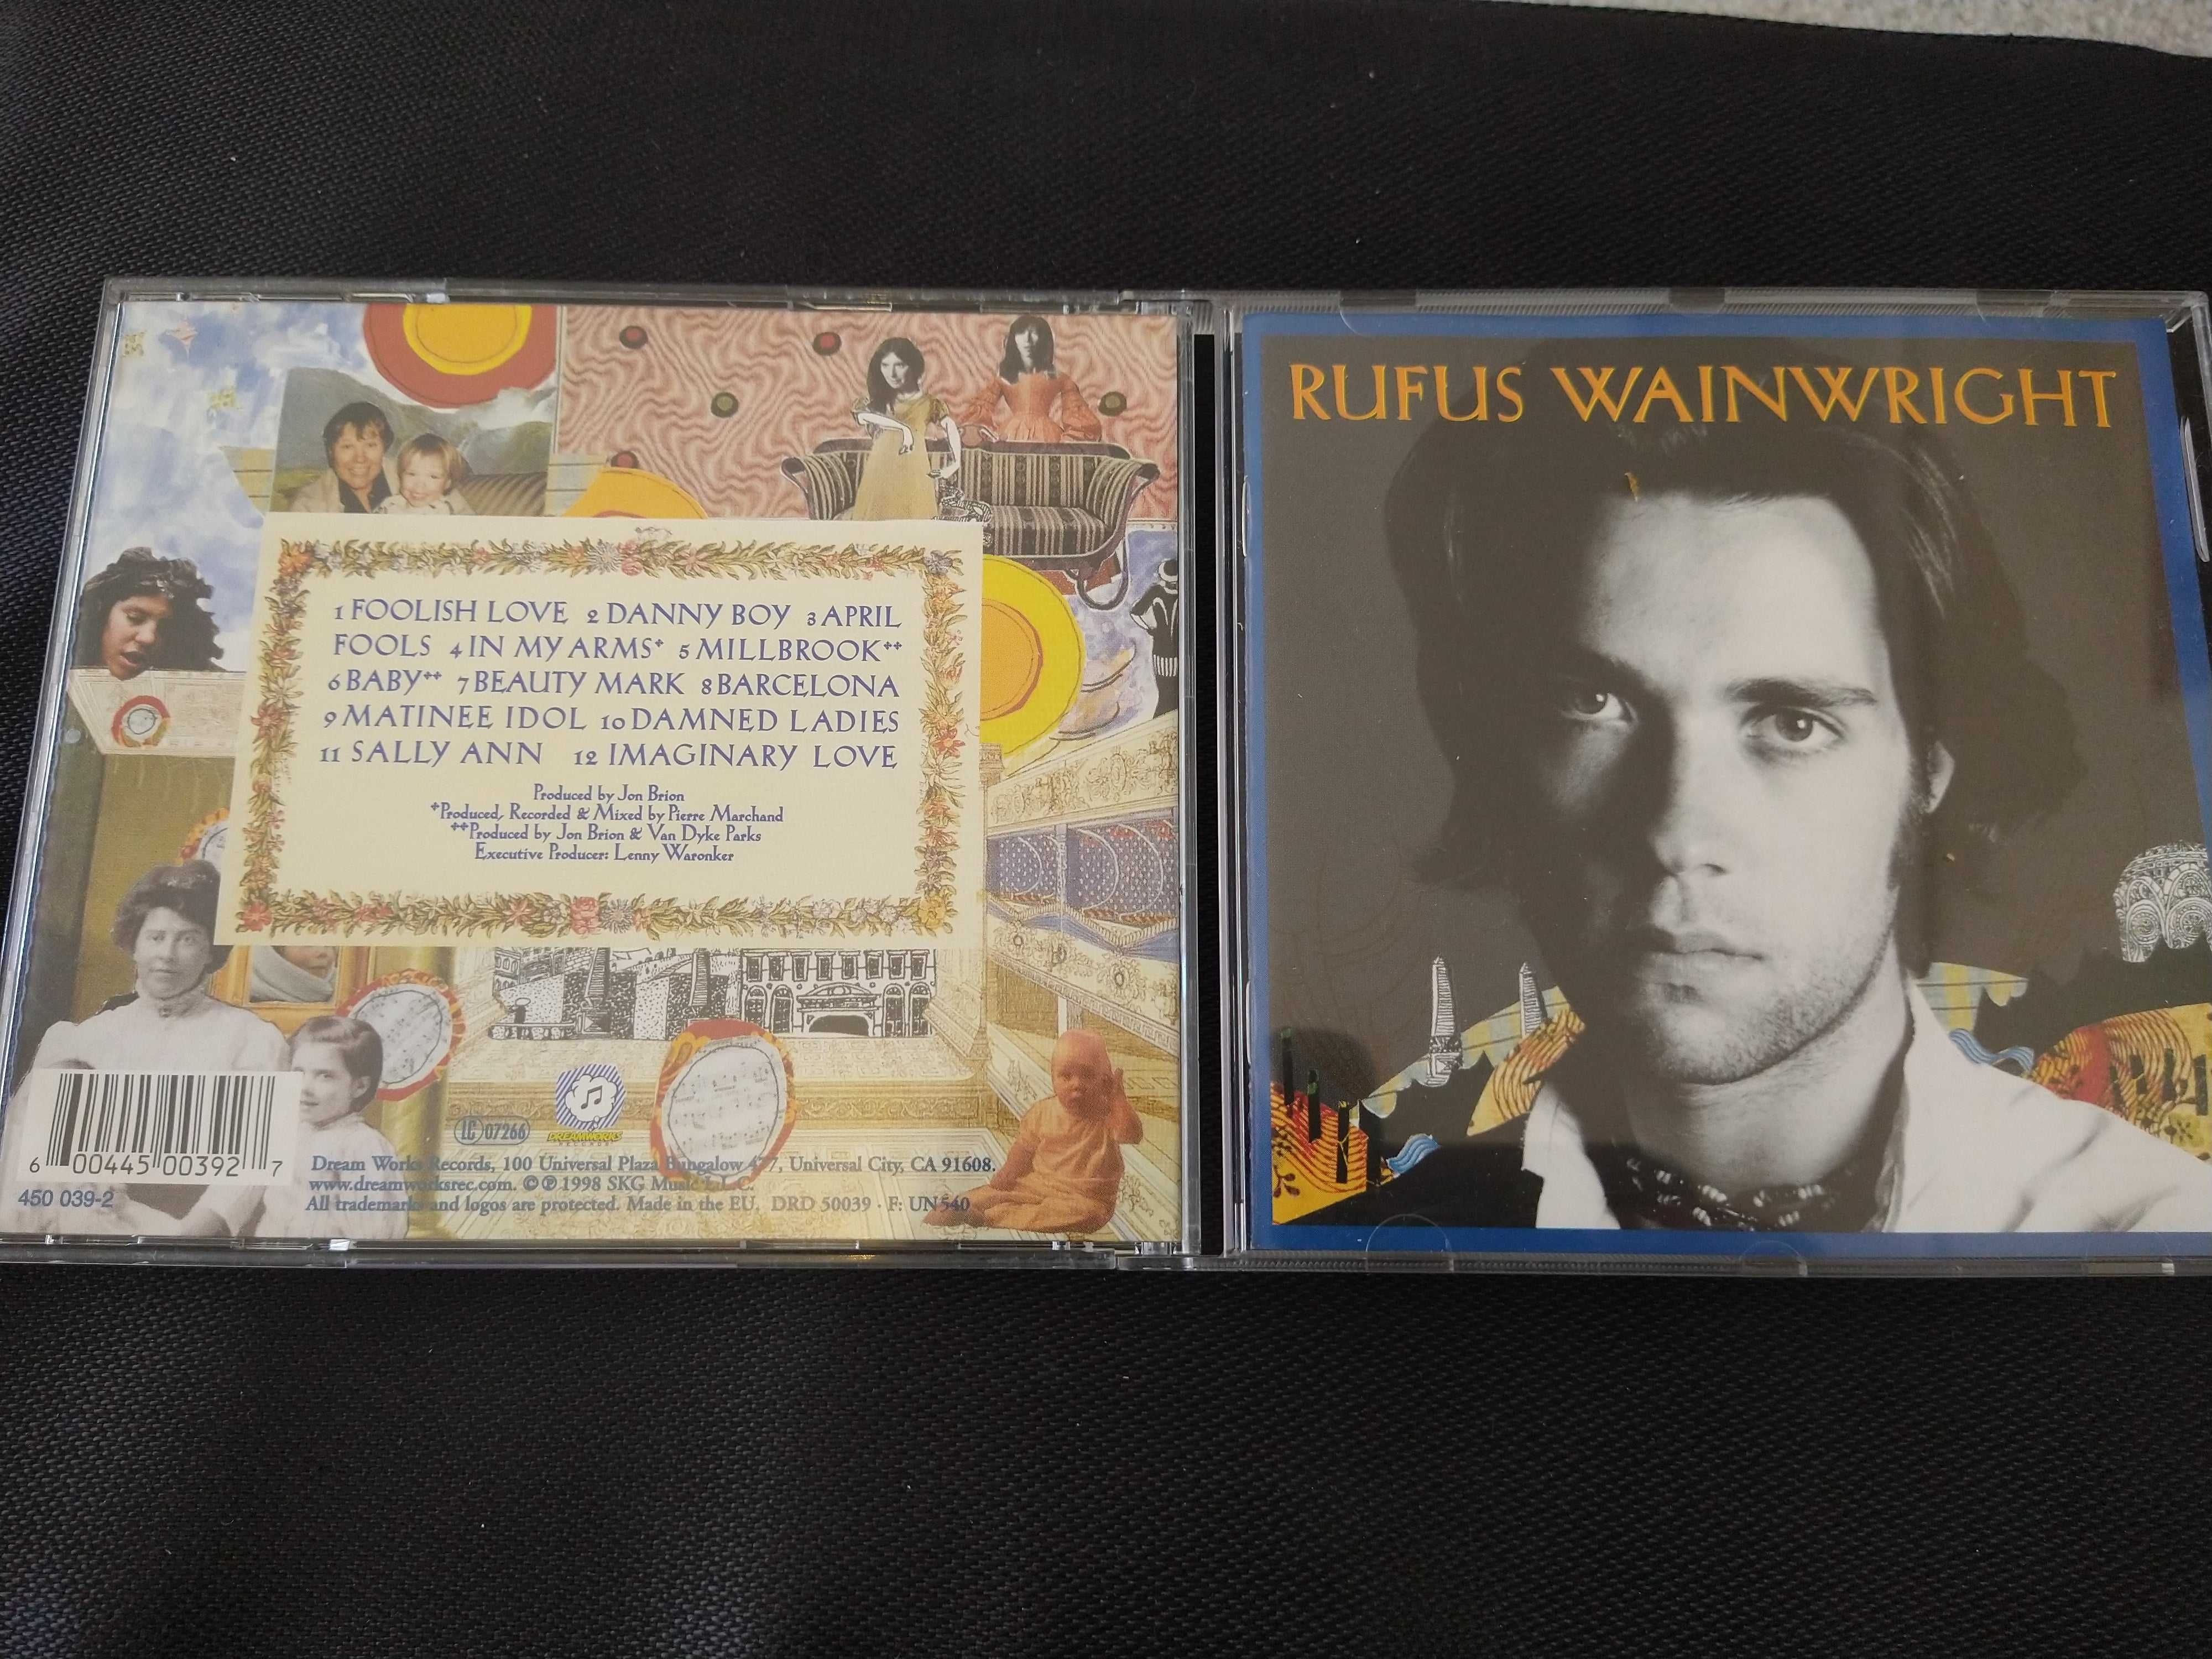 CDs Rufus Wainright e Camané